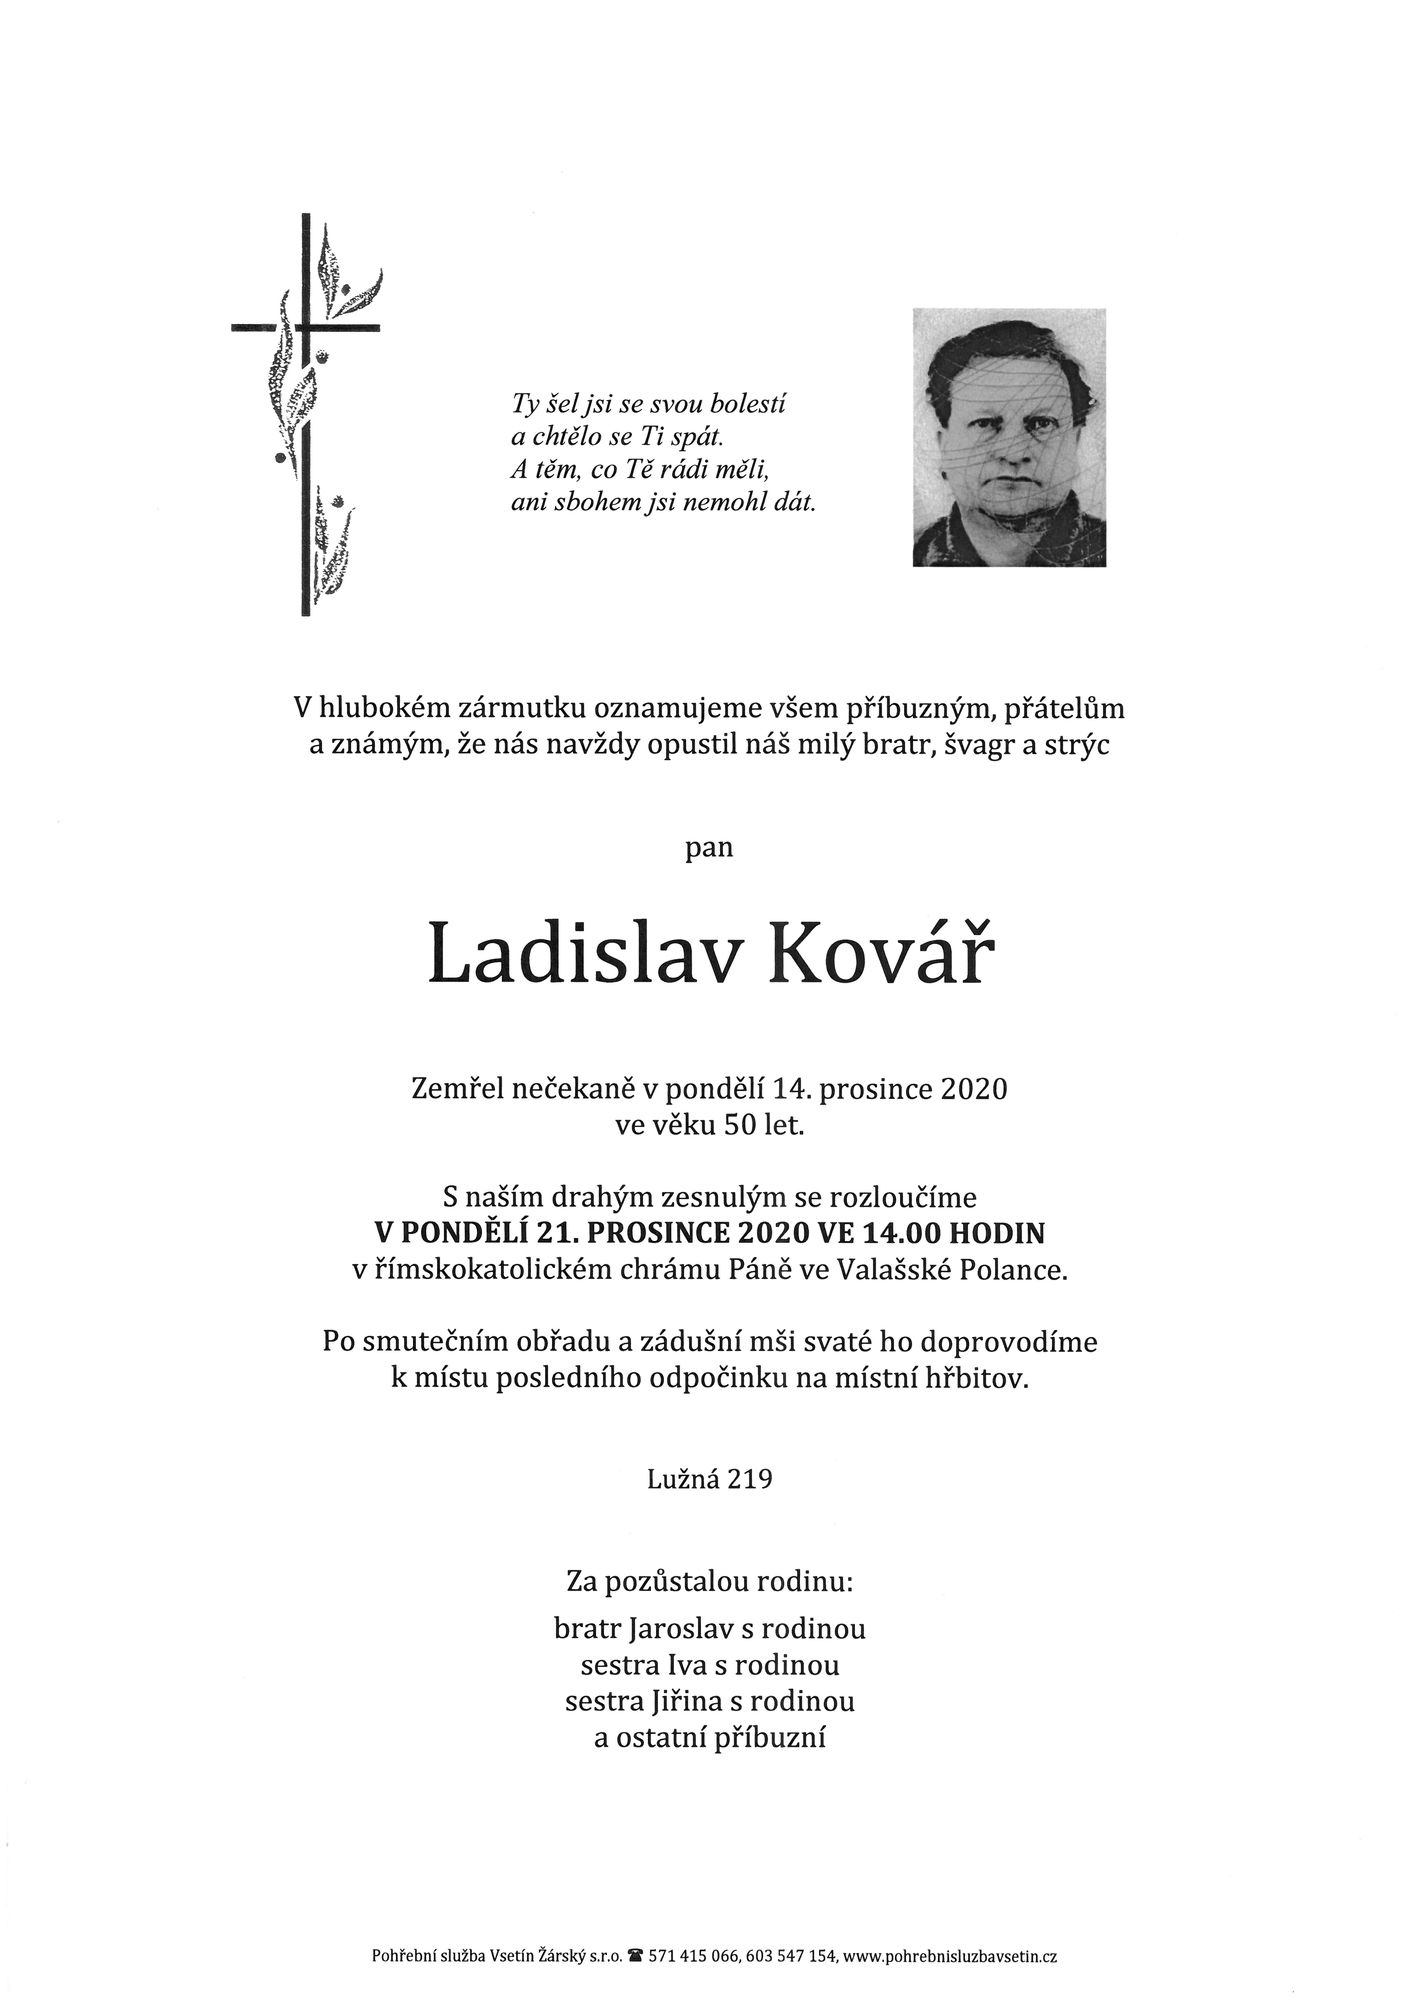 Ladislav Kovář